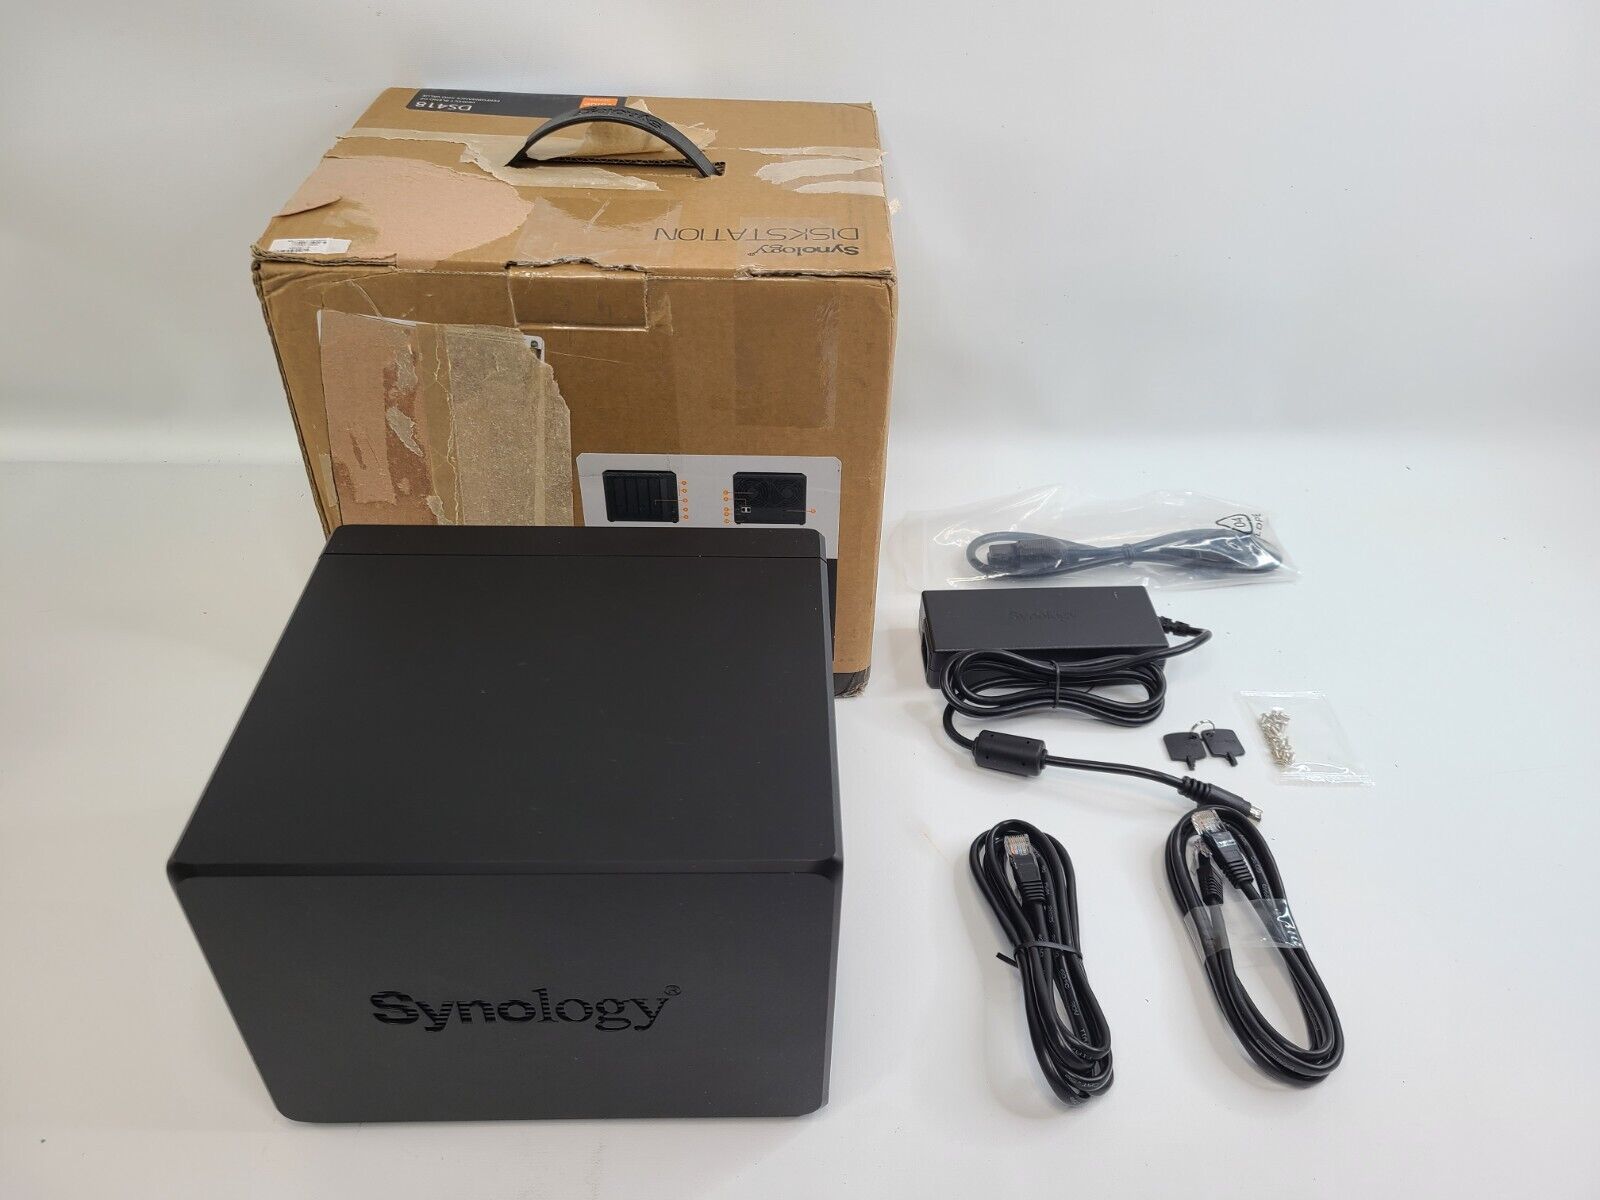 Synology 4 bay NAS DiskStation Model DS418 - Black - New - Open Box